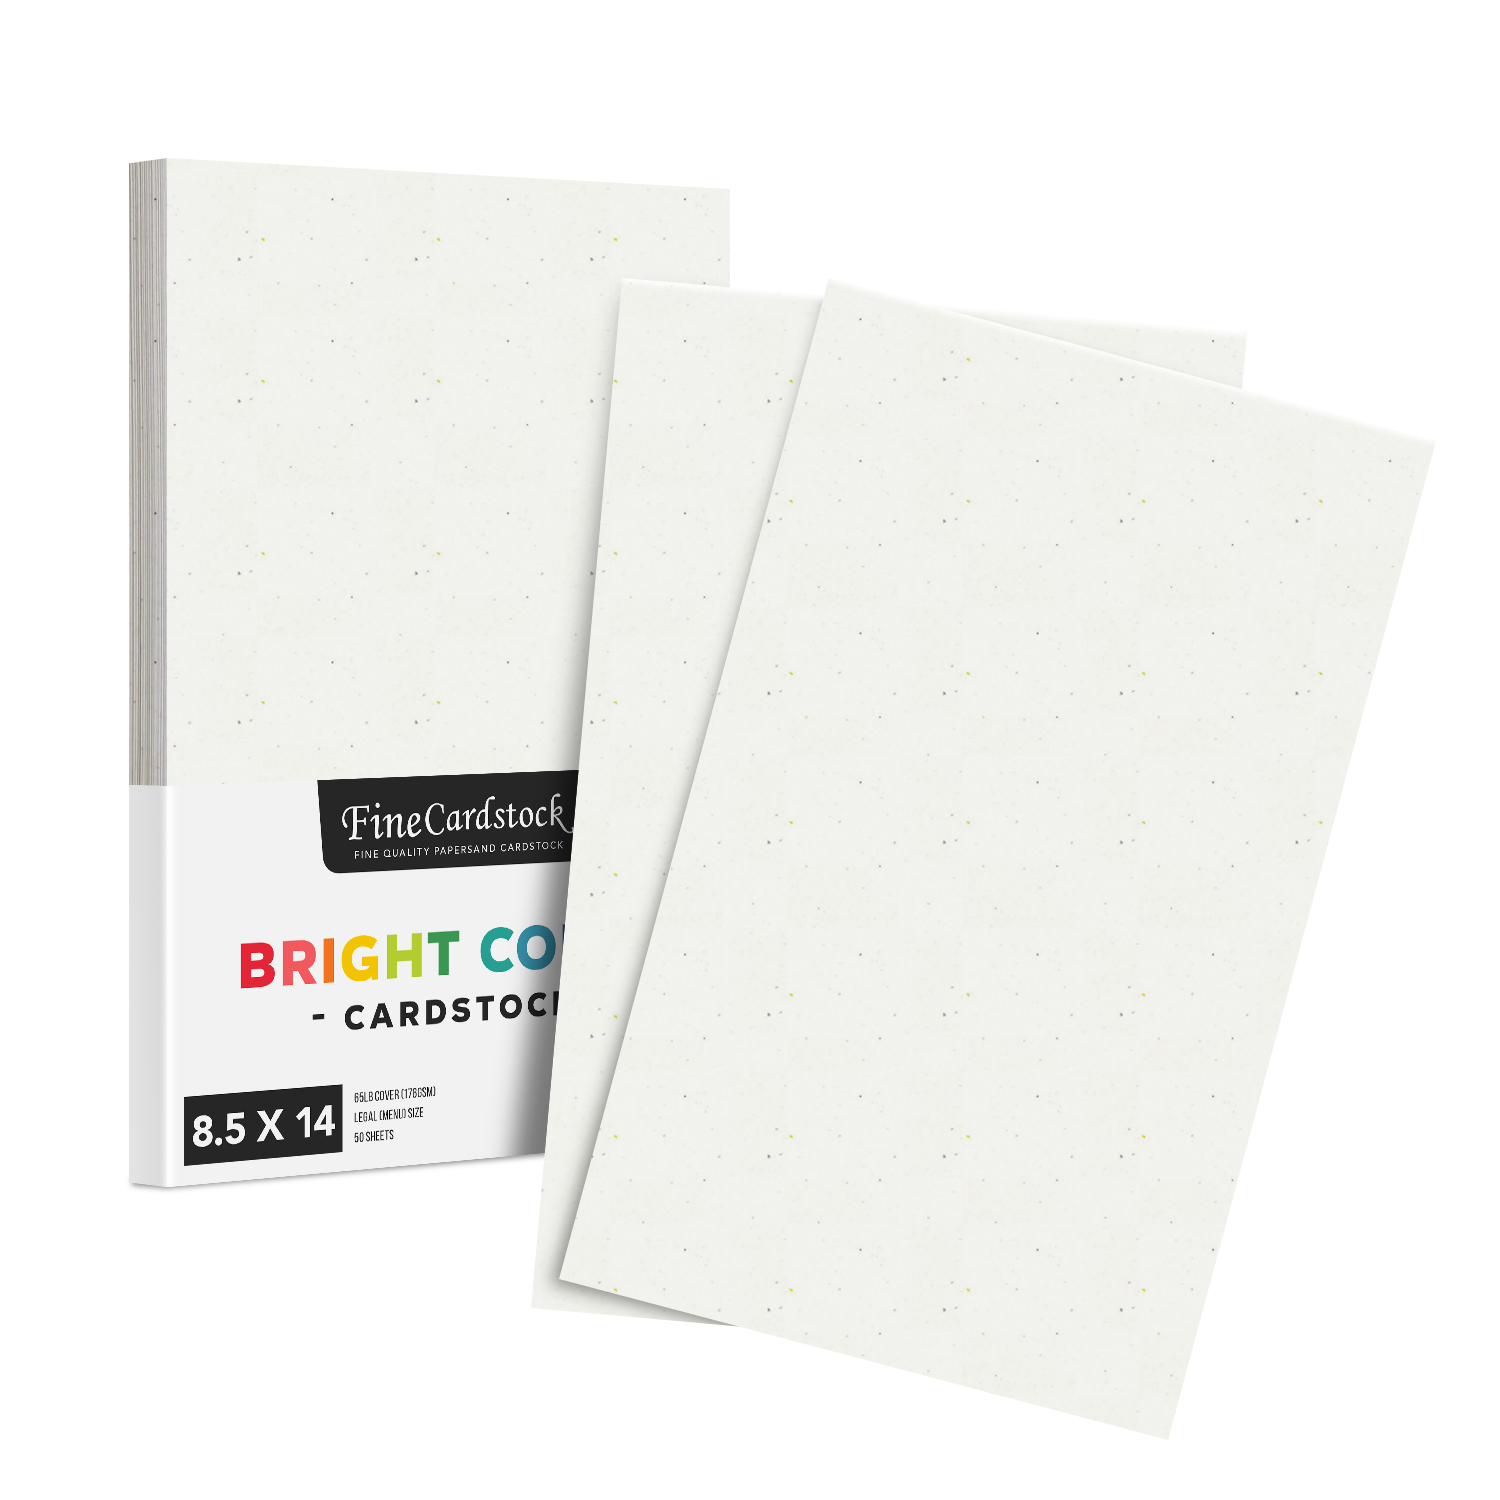 8.5 x 14 Color Cardstock Sunburst Yellow - Bulk and Wholesale